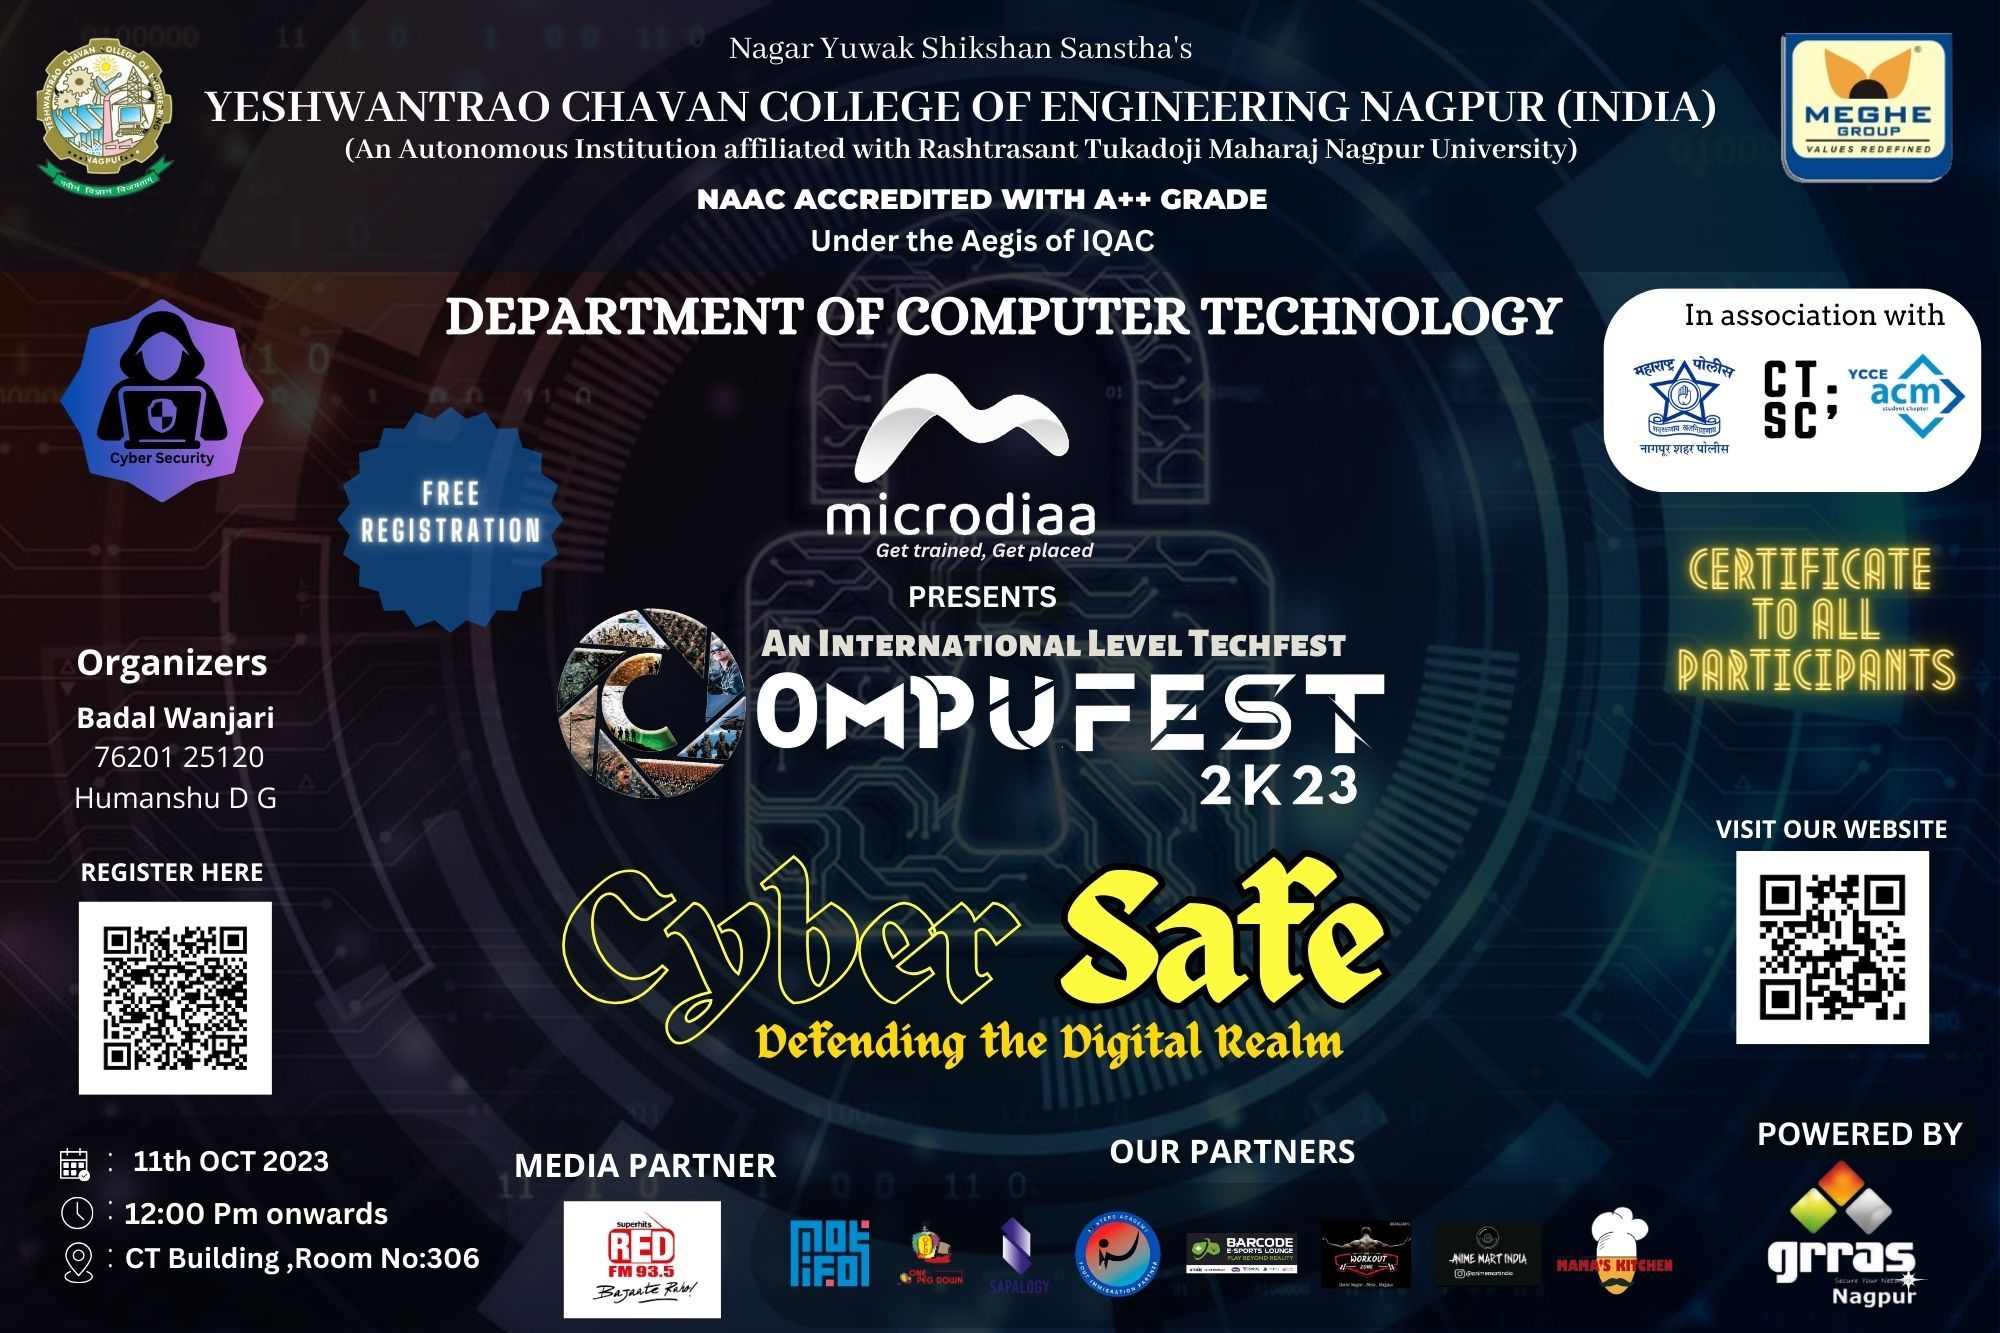 Event 12 - CyberSafe